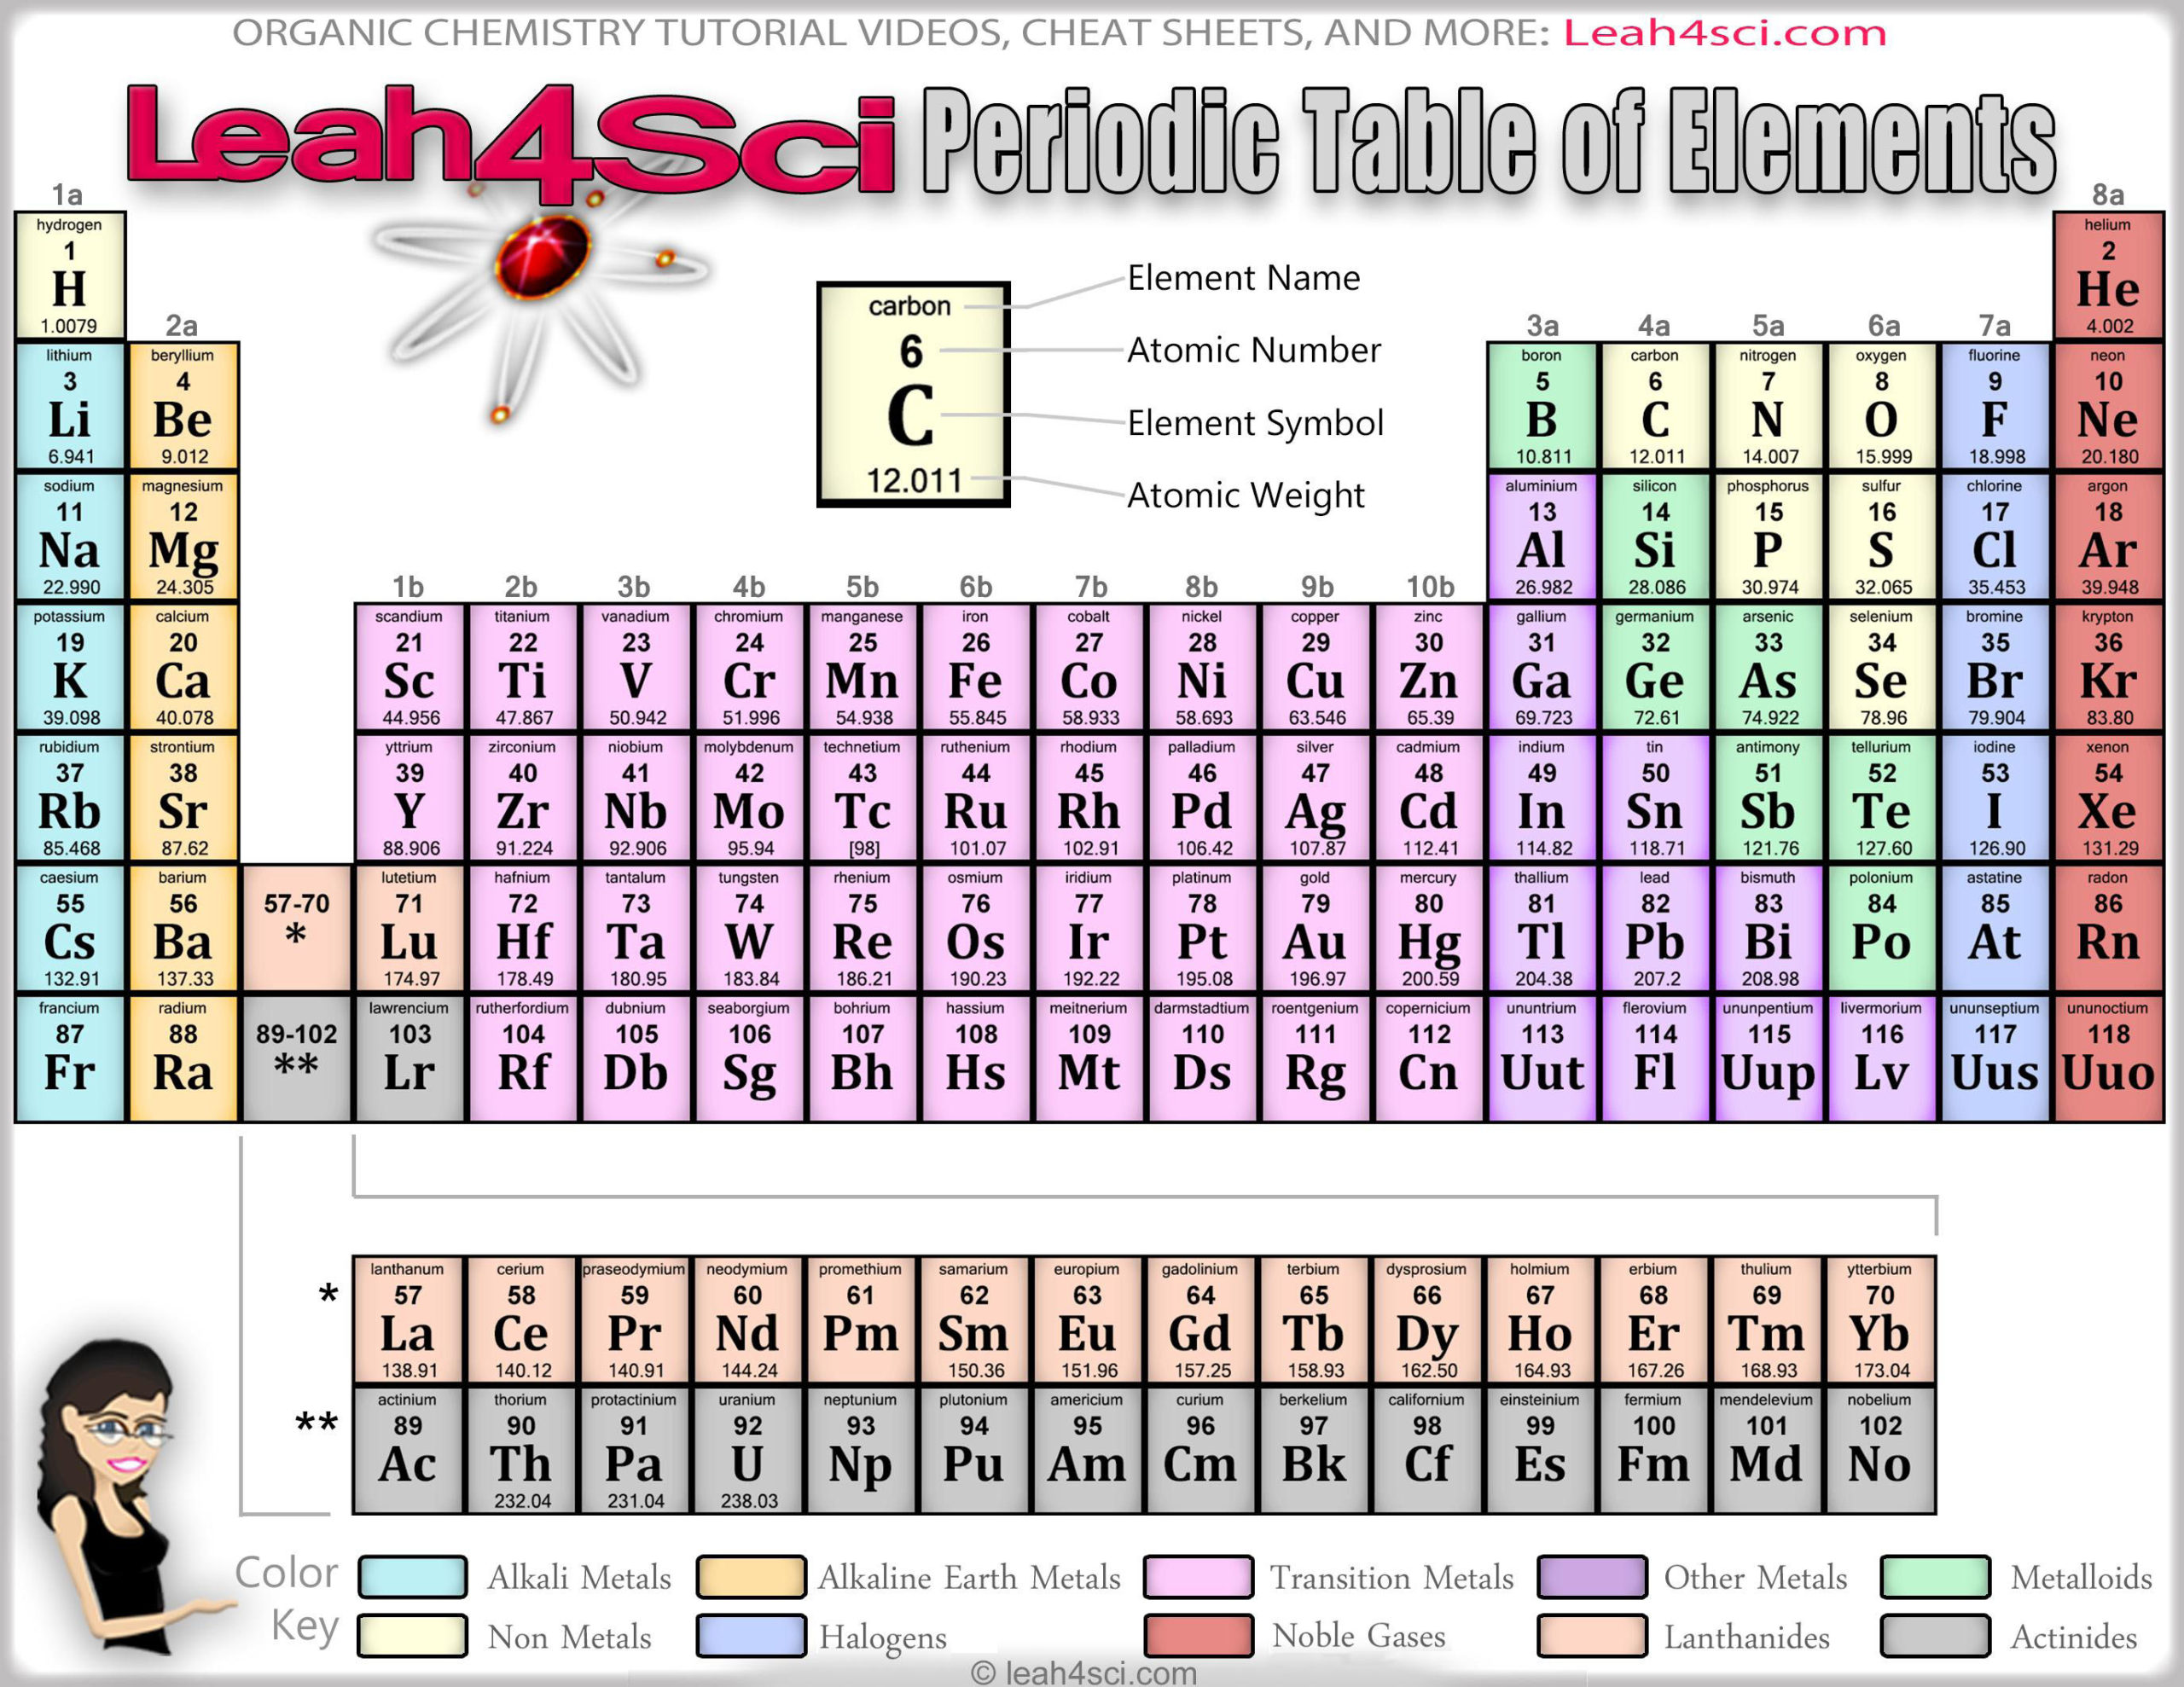 Periodic table chemistry - paymentkiza